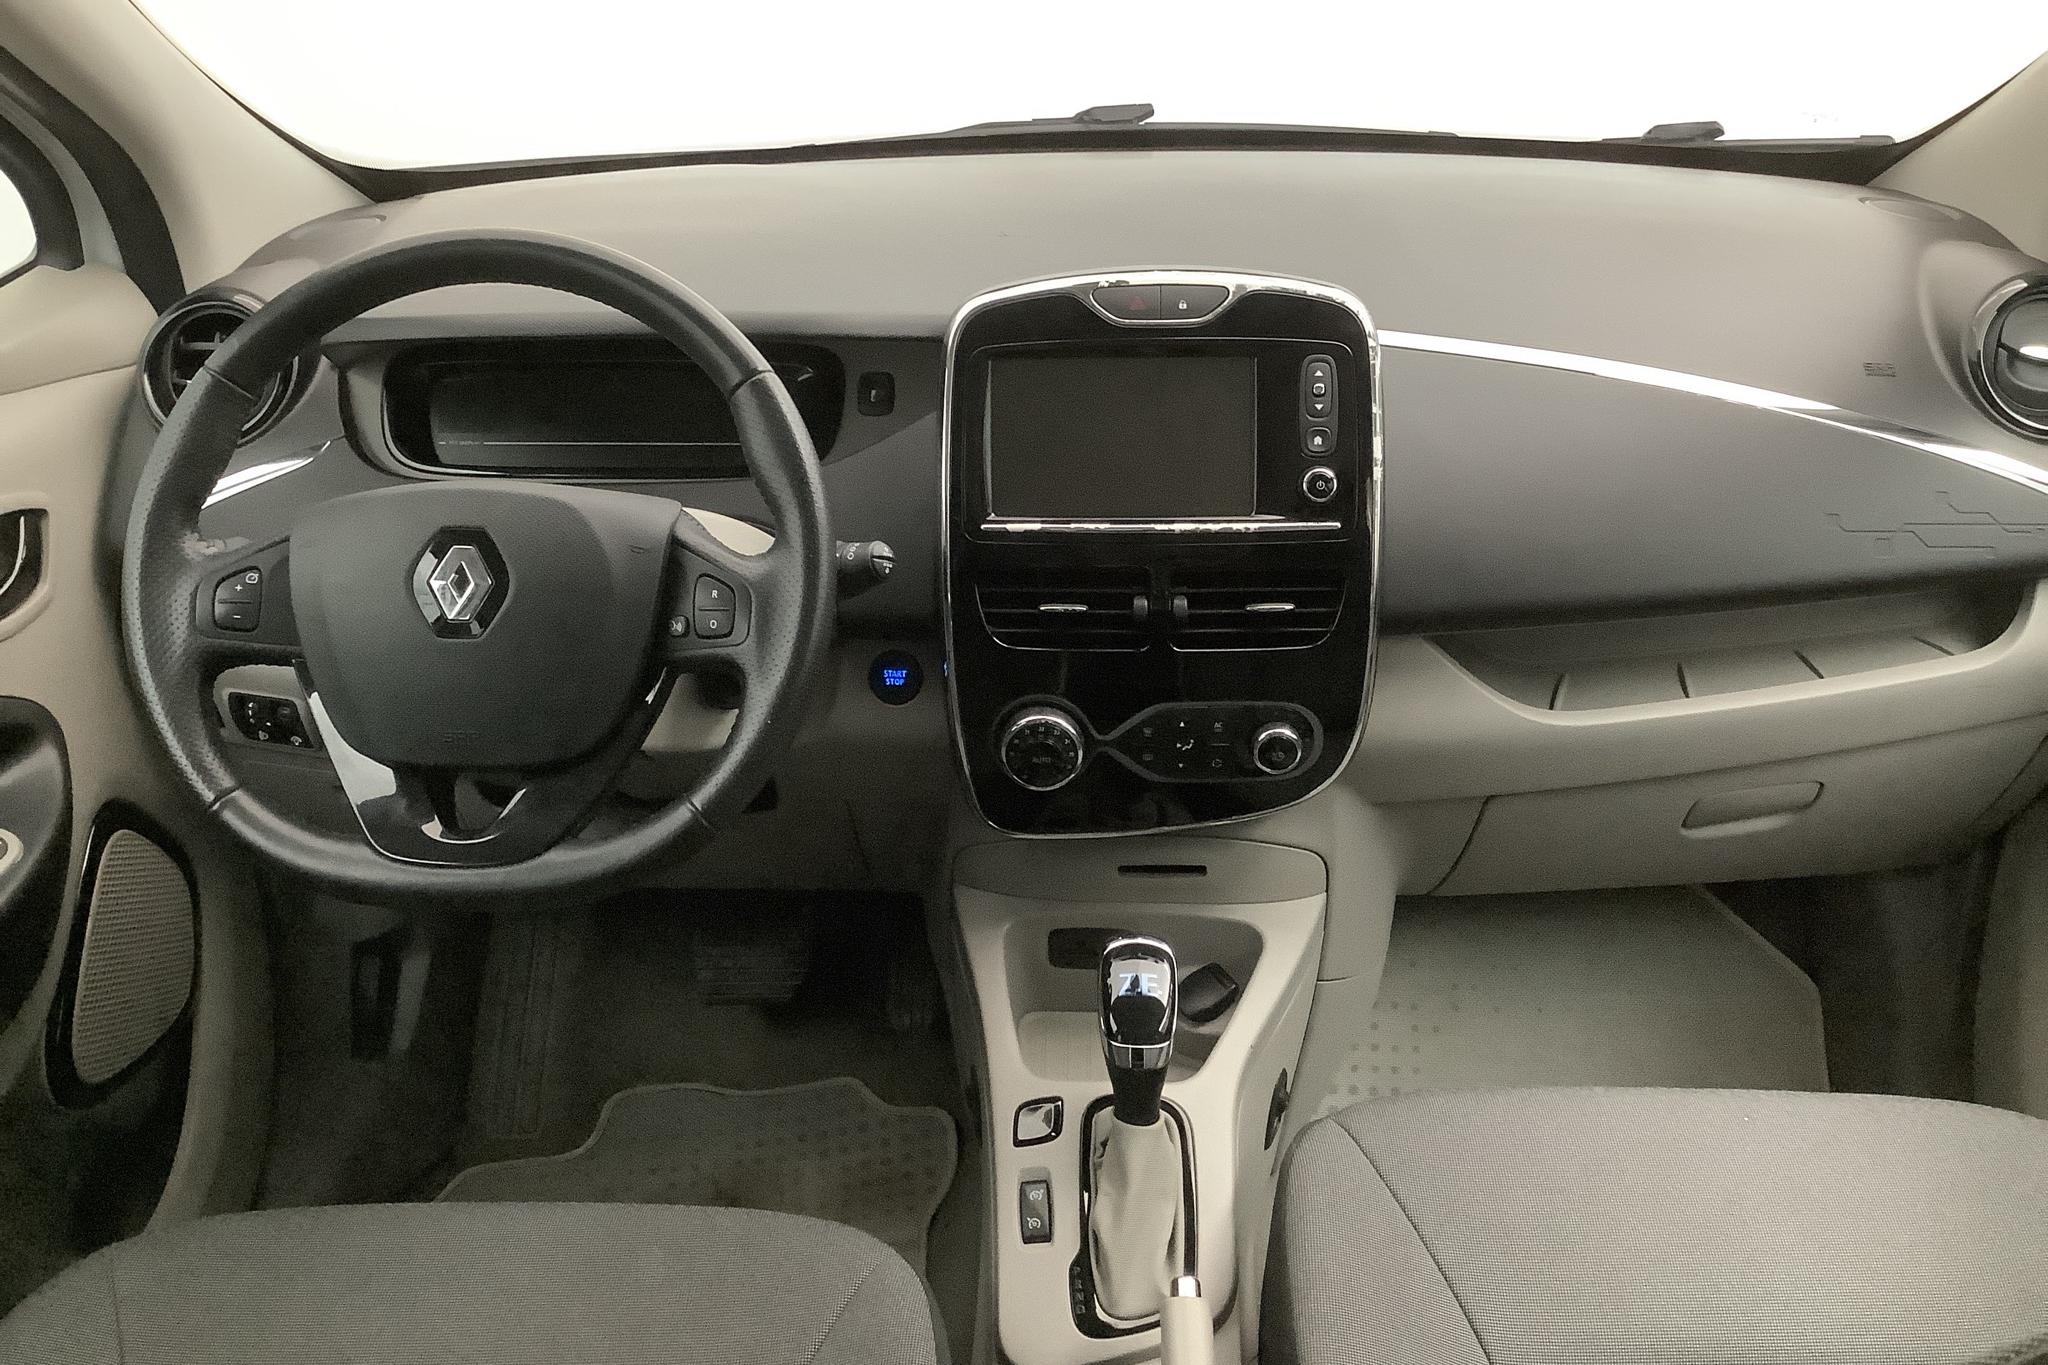 Renault Zoe 22 kWh R88 (88hk) - 28 930 km - Automatic - white - 2015